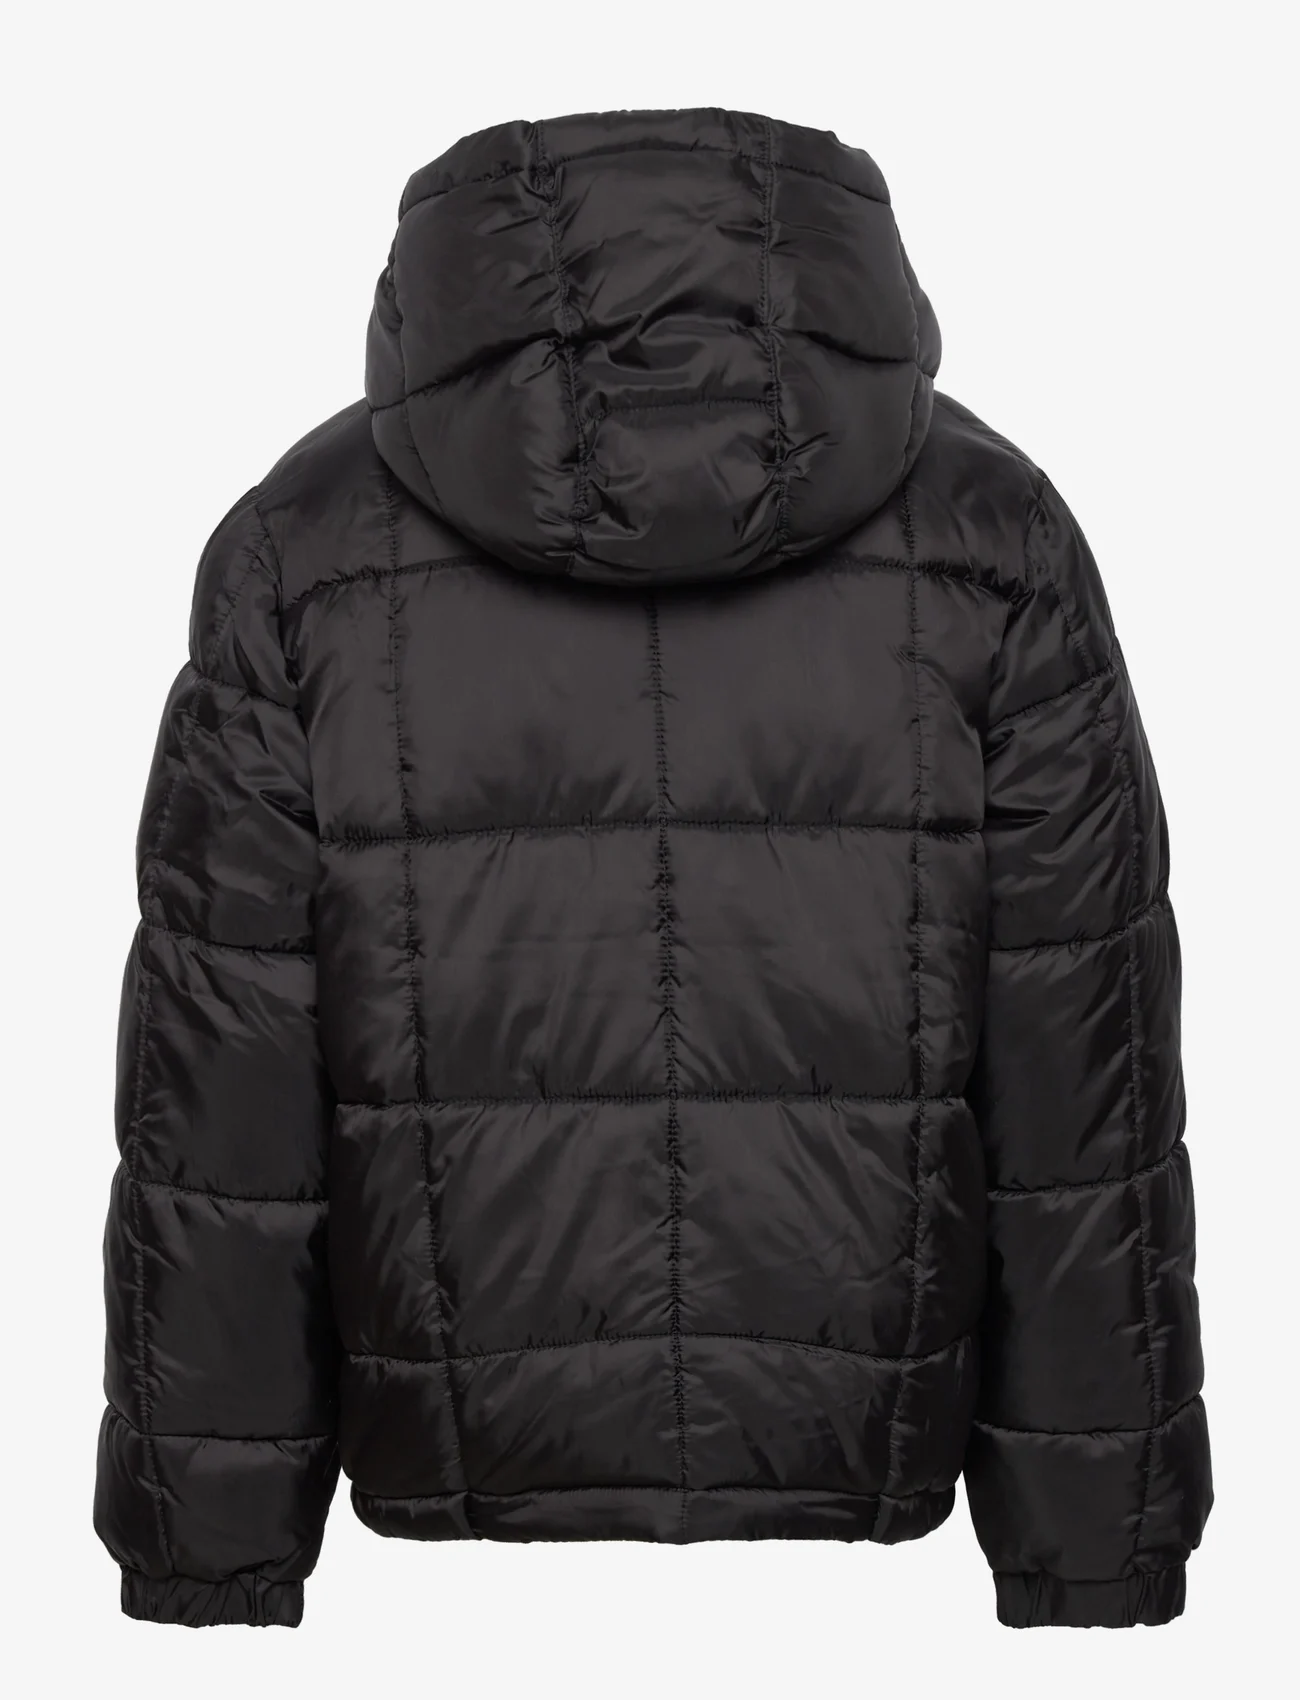 Levi's - Levi's® Reversible Puffer Jacket - puffer & padded - black - 1